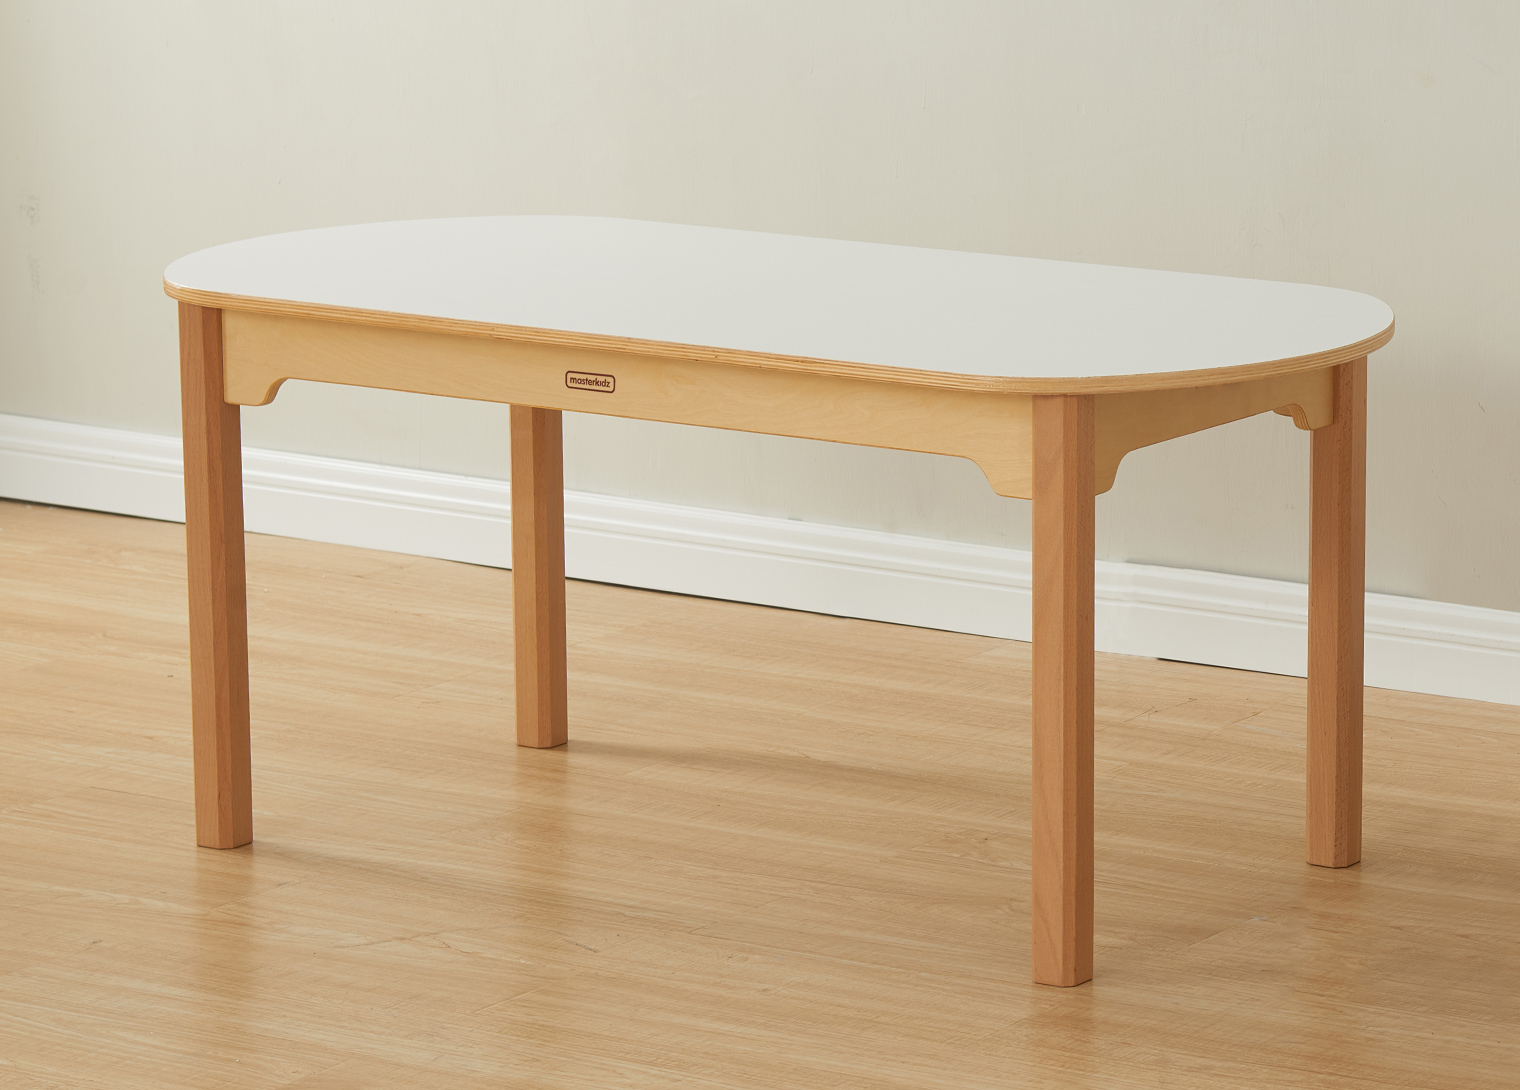 Inga Design Kids - 365H Oval-Shaped Table (White)